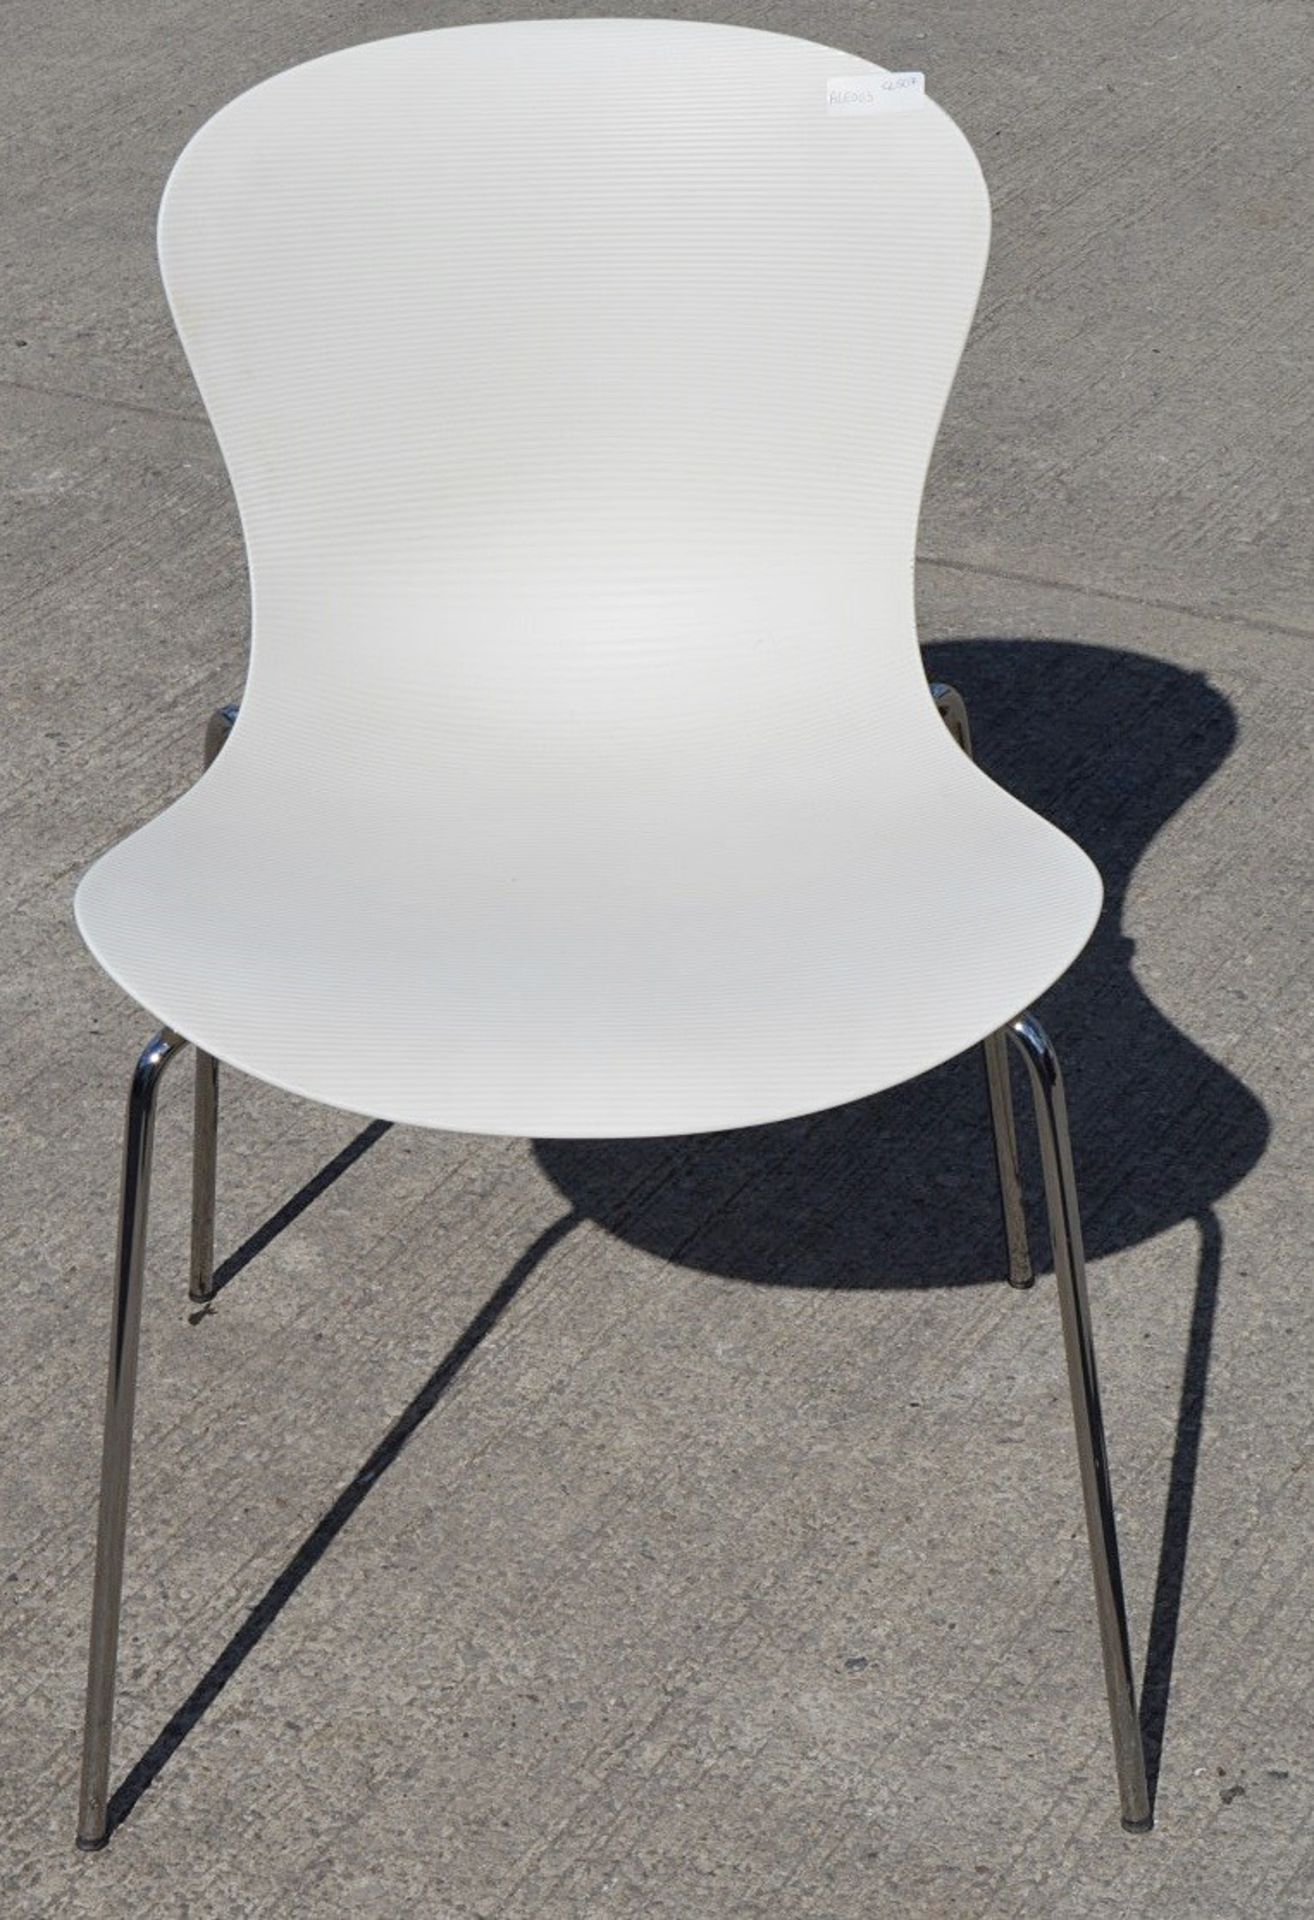 1 x Genuine Fritz Hansen 'Nap' Designer Chair In White & Chrome (KS50) - Dimensions: W48 x D40 x